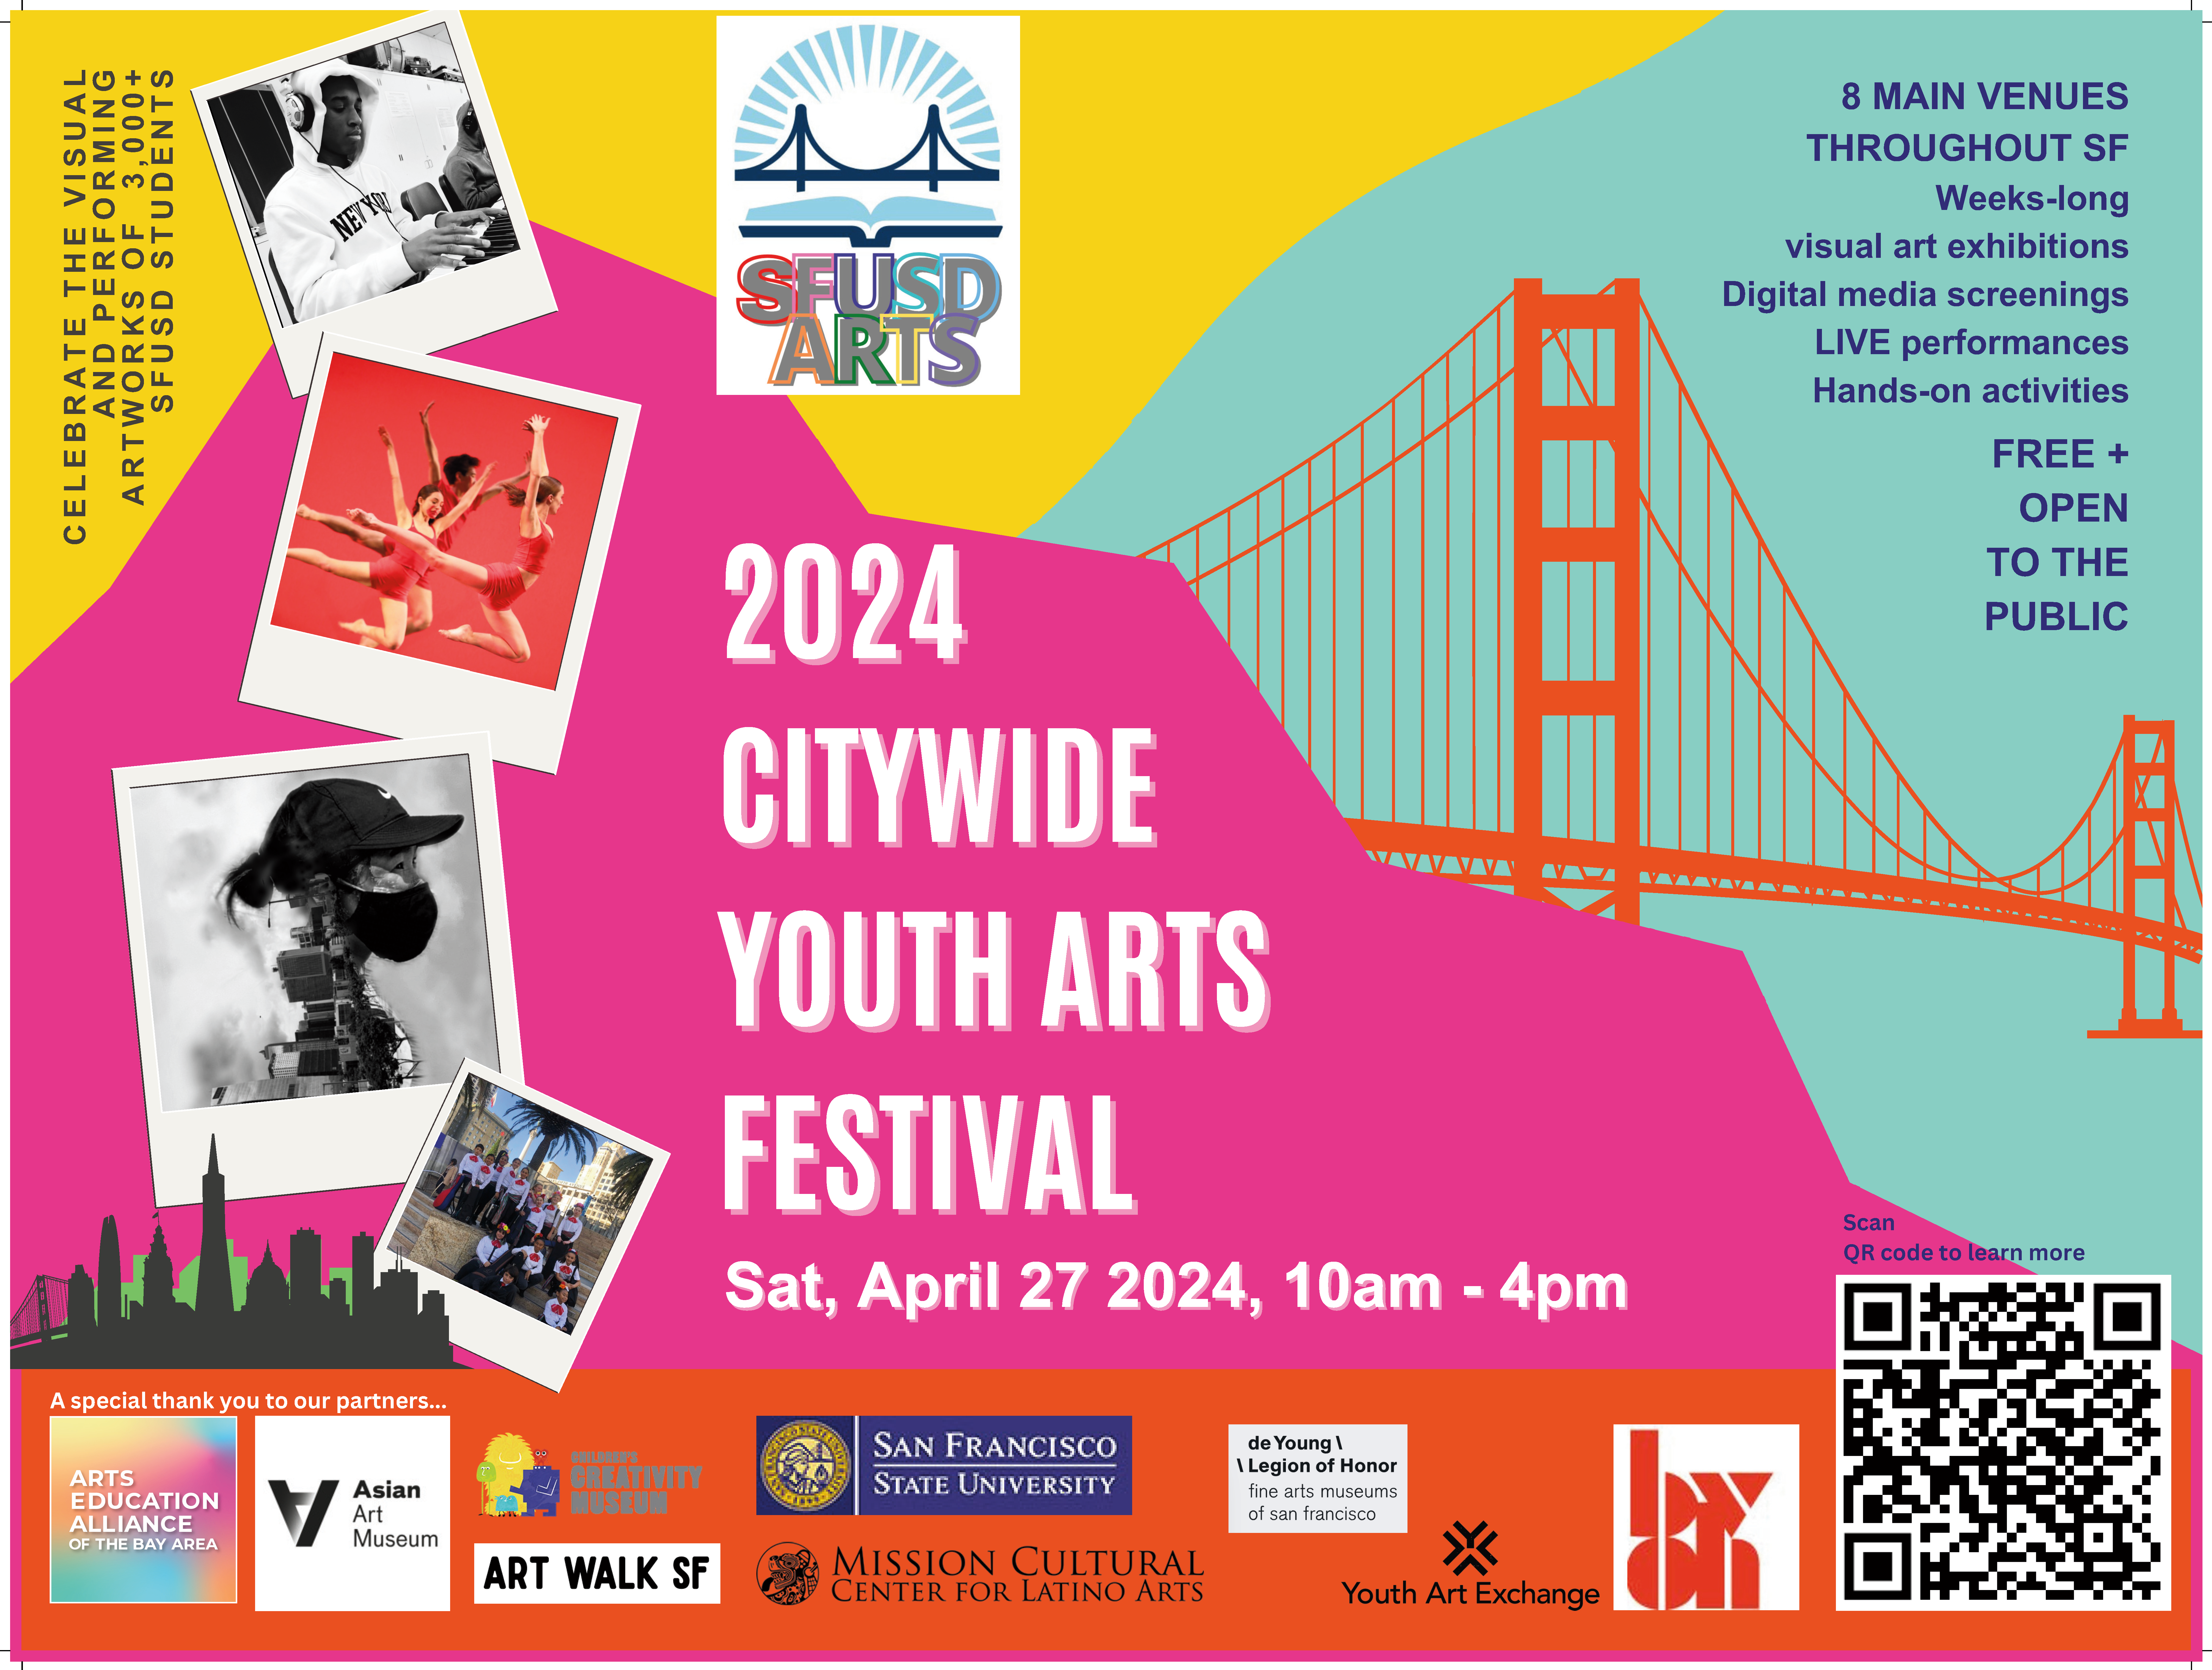 SFUSD Arts 2024 CW Youth Arts Festival Poster